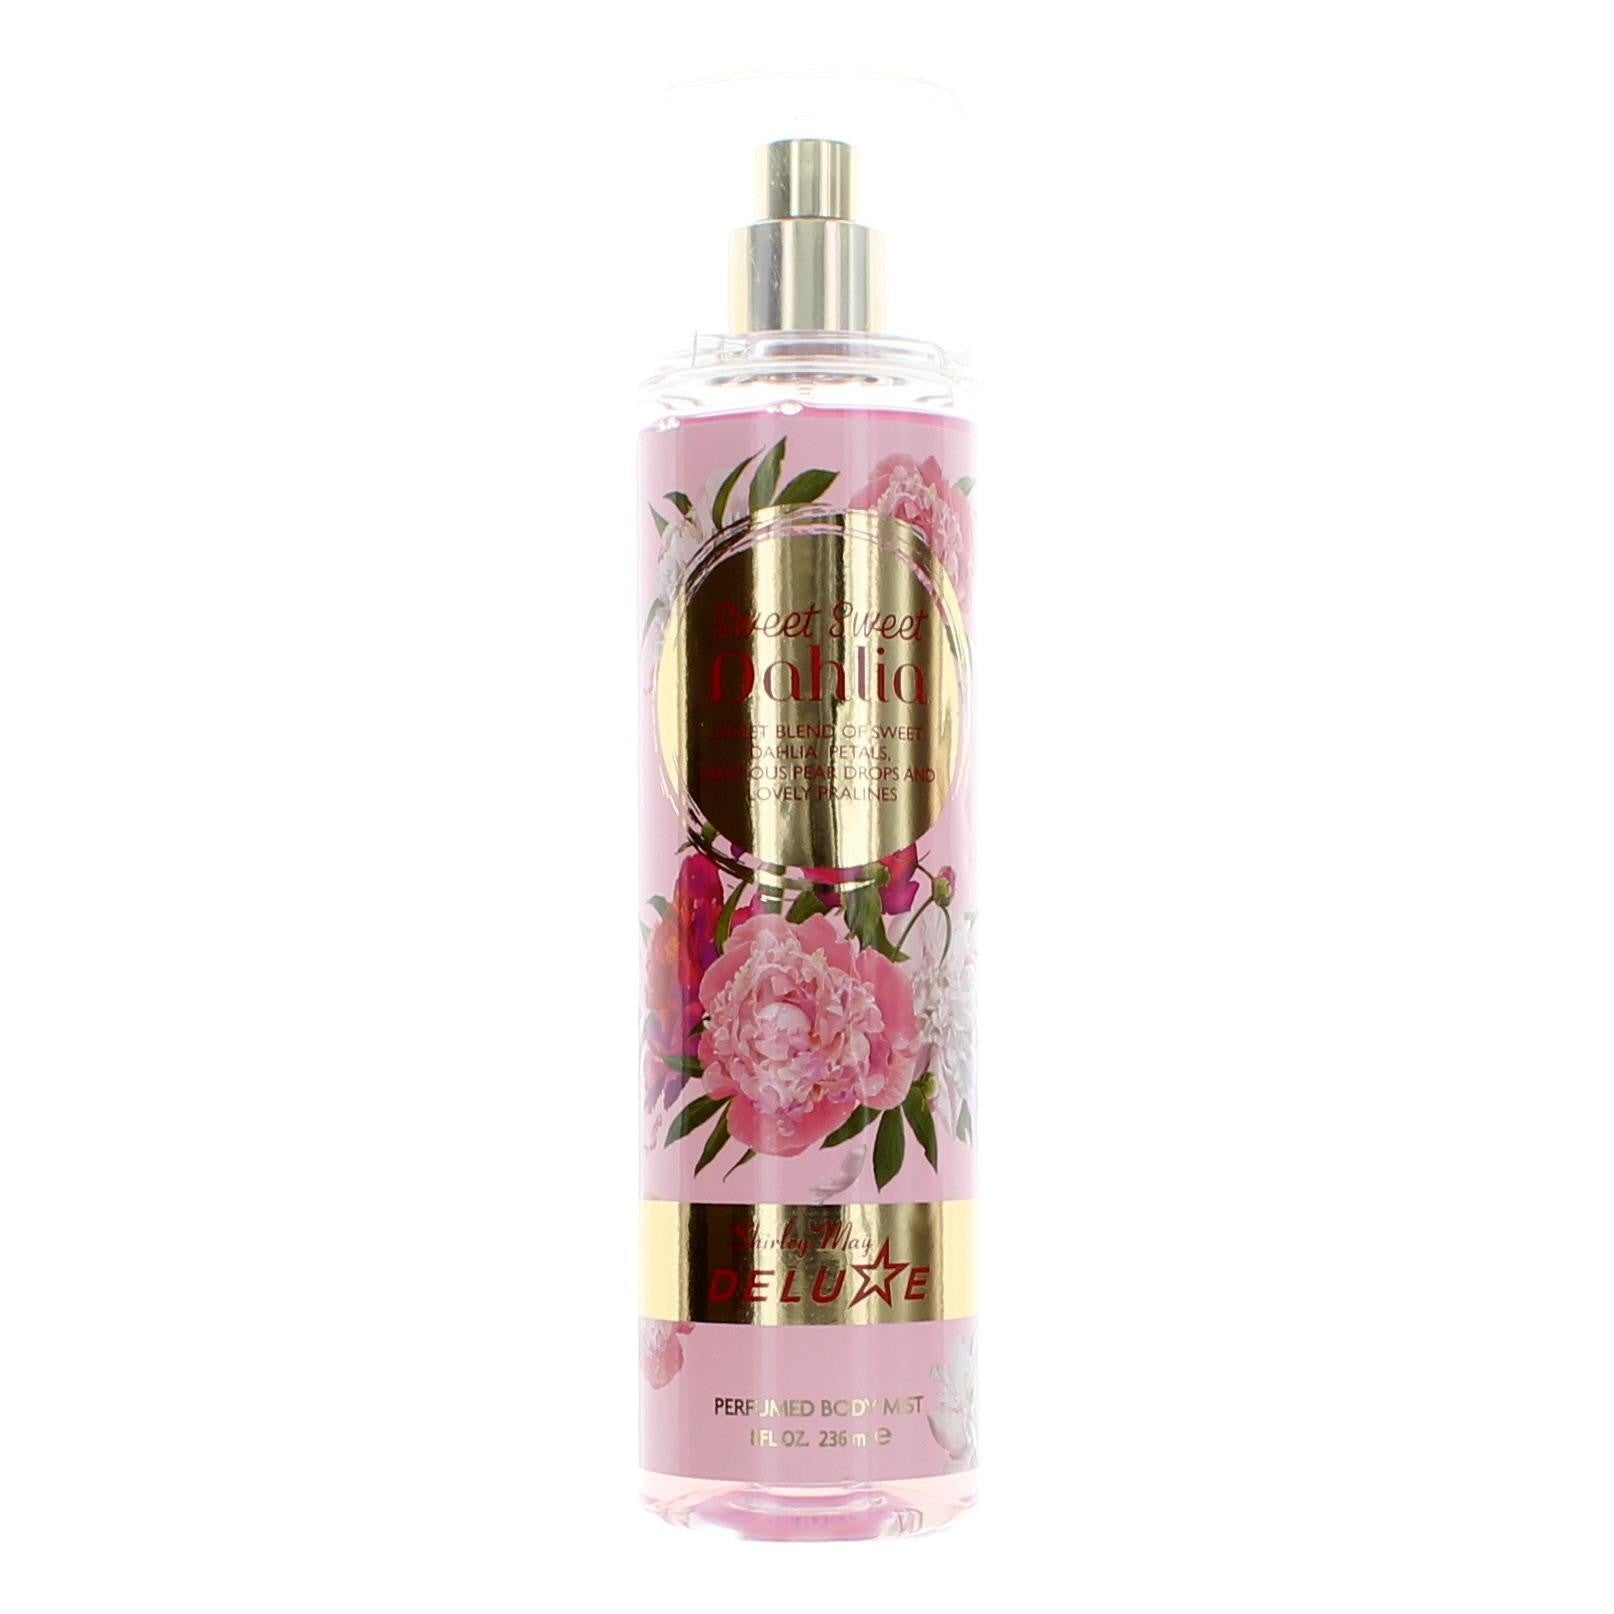 Bottle of Sweet Sweet Dahlia by Shirley May Deluxe, 8 oz Perfumed Body Mist for Women